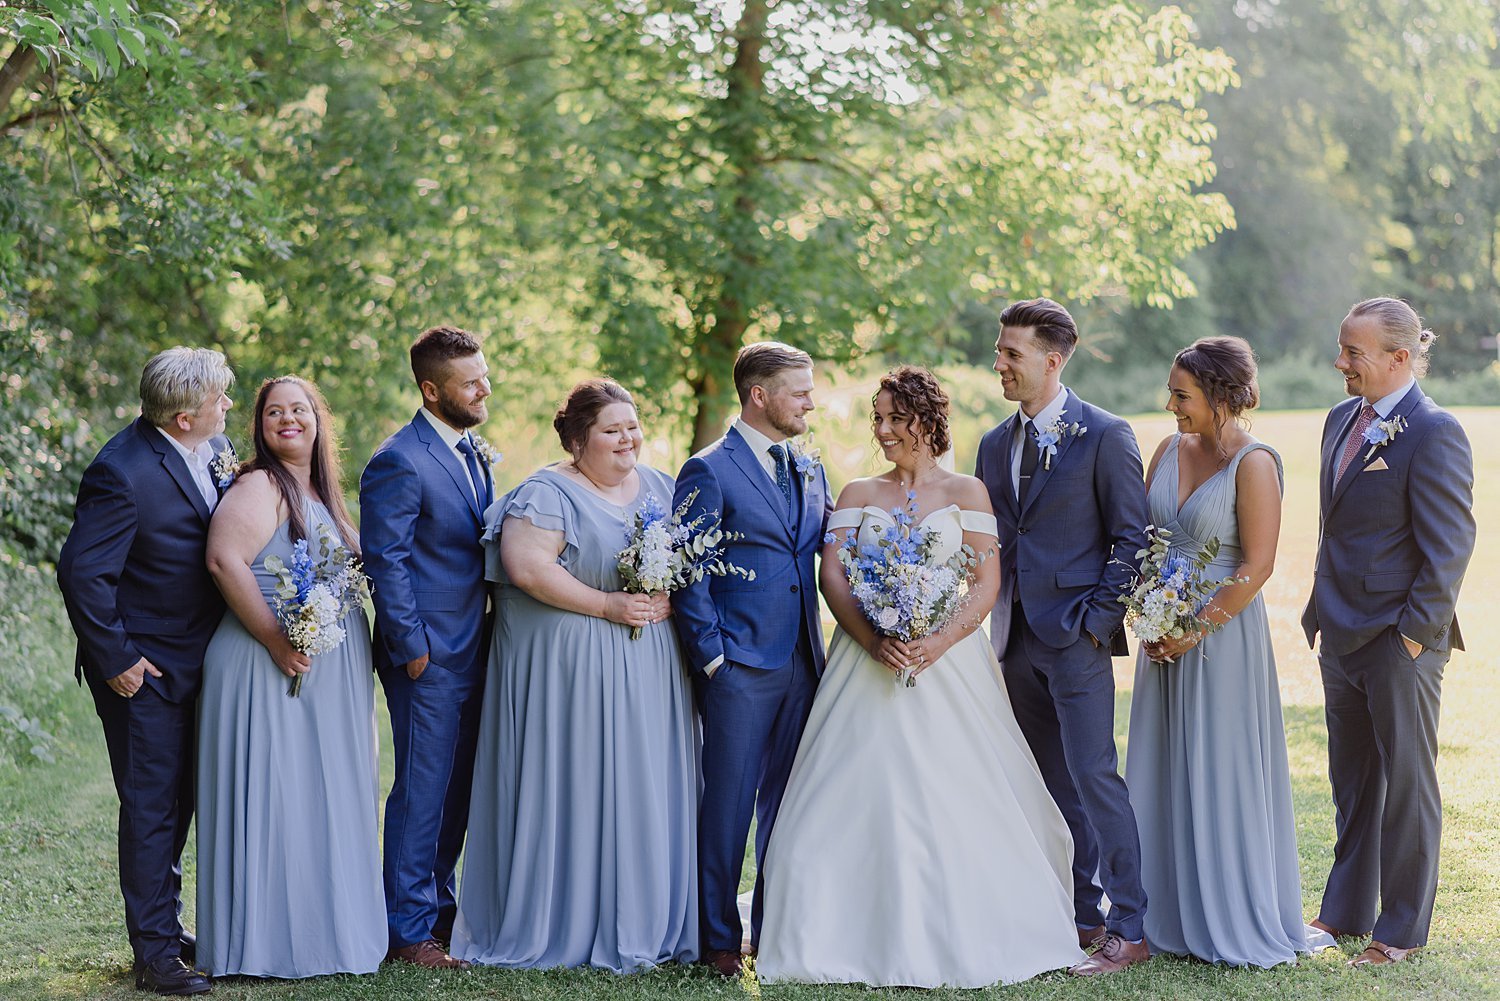 Elegant Summer Backyard Tented Wedding in Sydenham, Ontario | Prince Edward County Wedding Photographer | Holly McMurter Photographs_0067.jpg